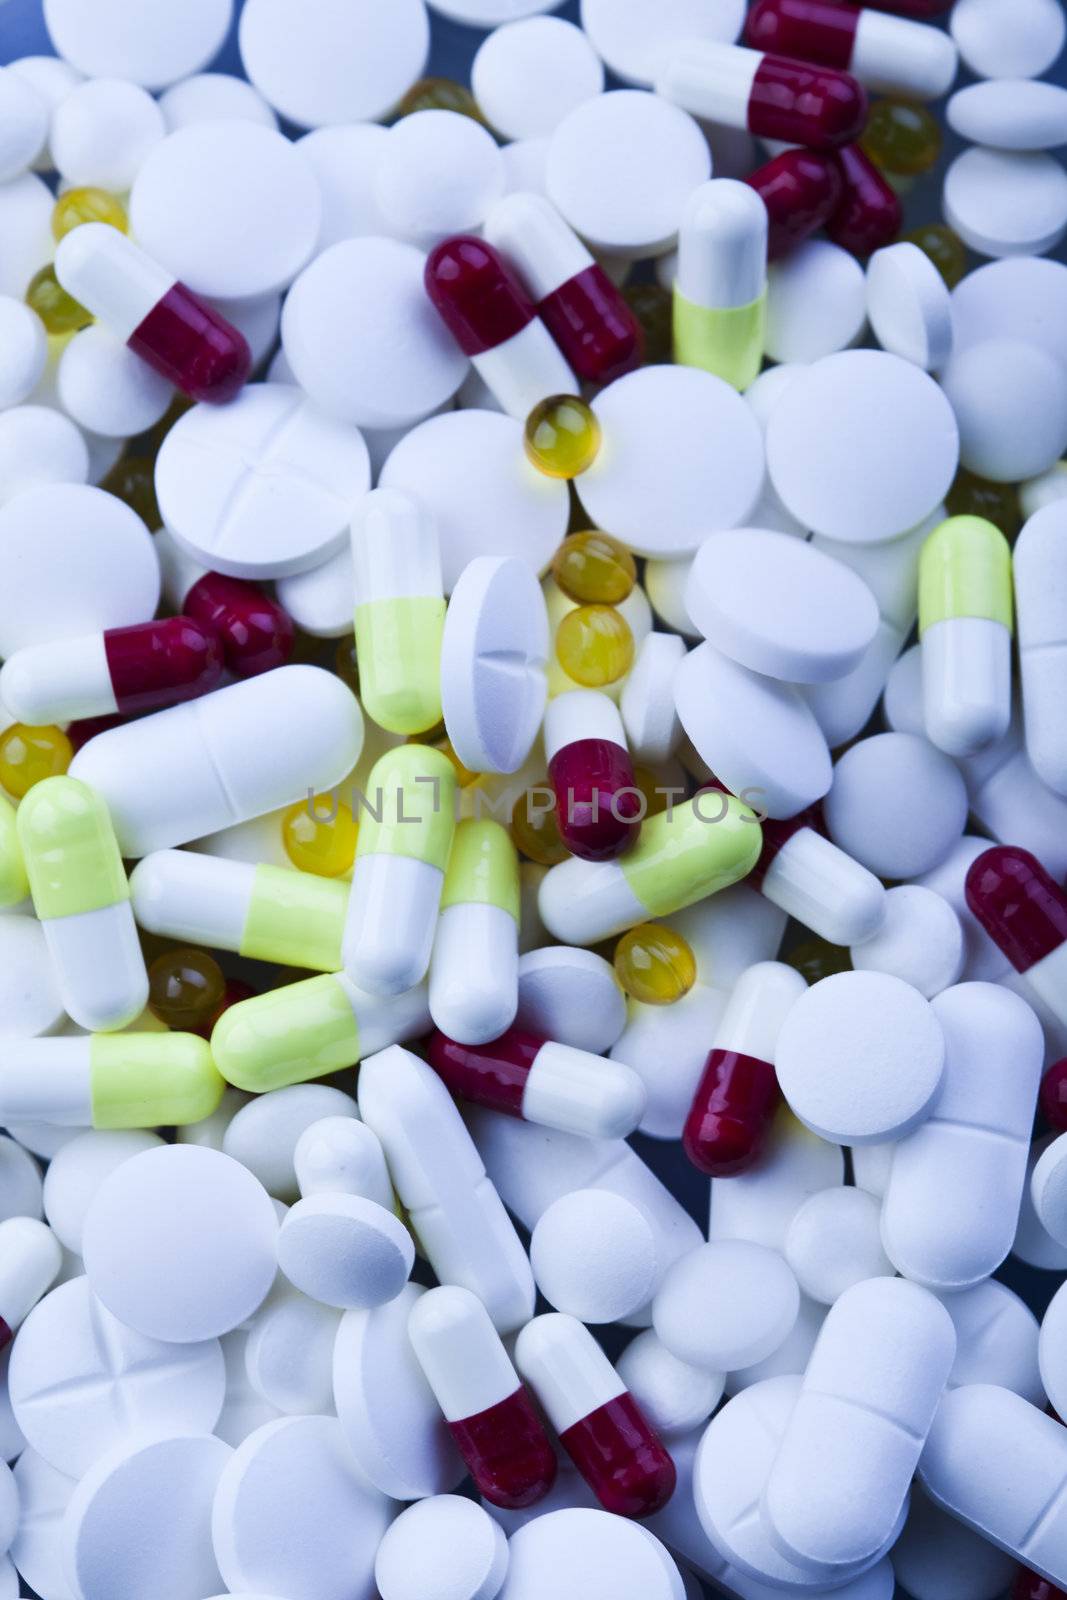 Colourful pills by JanPietruszka